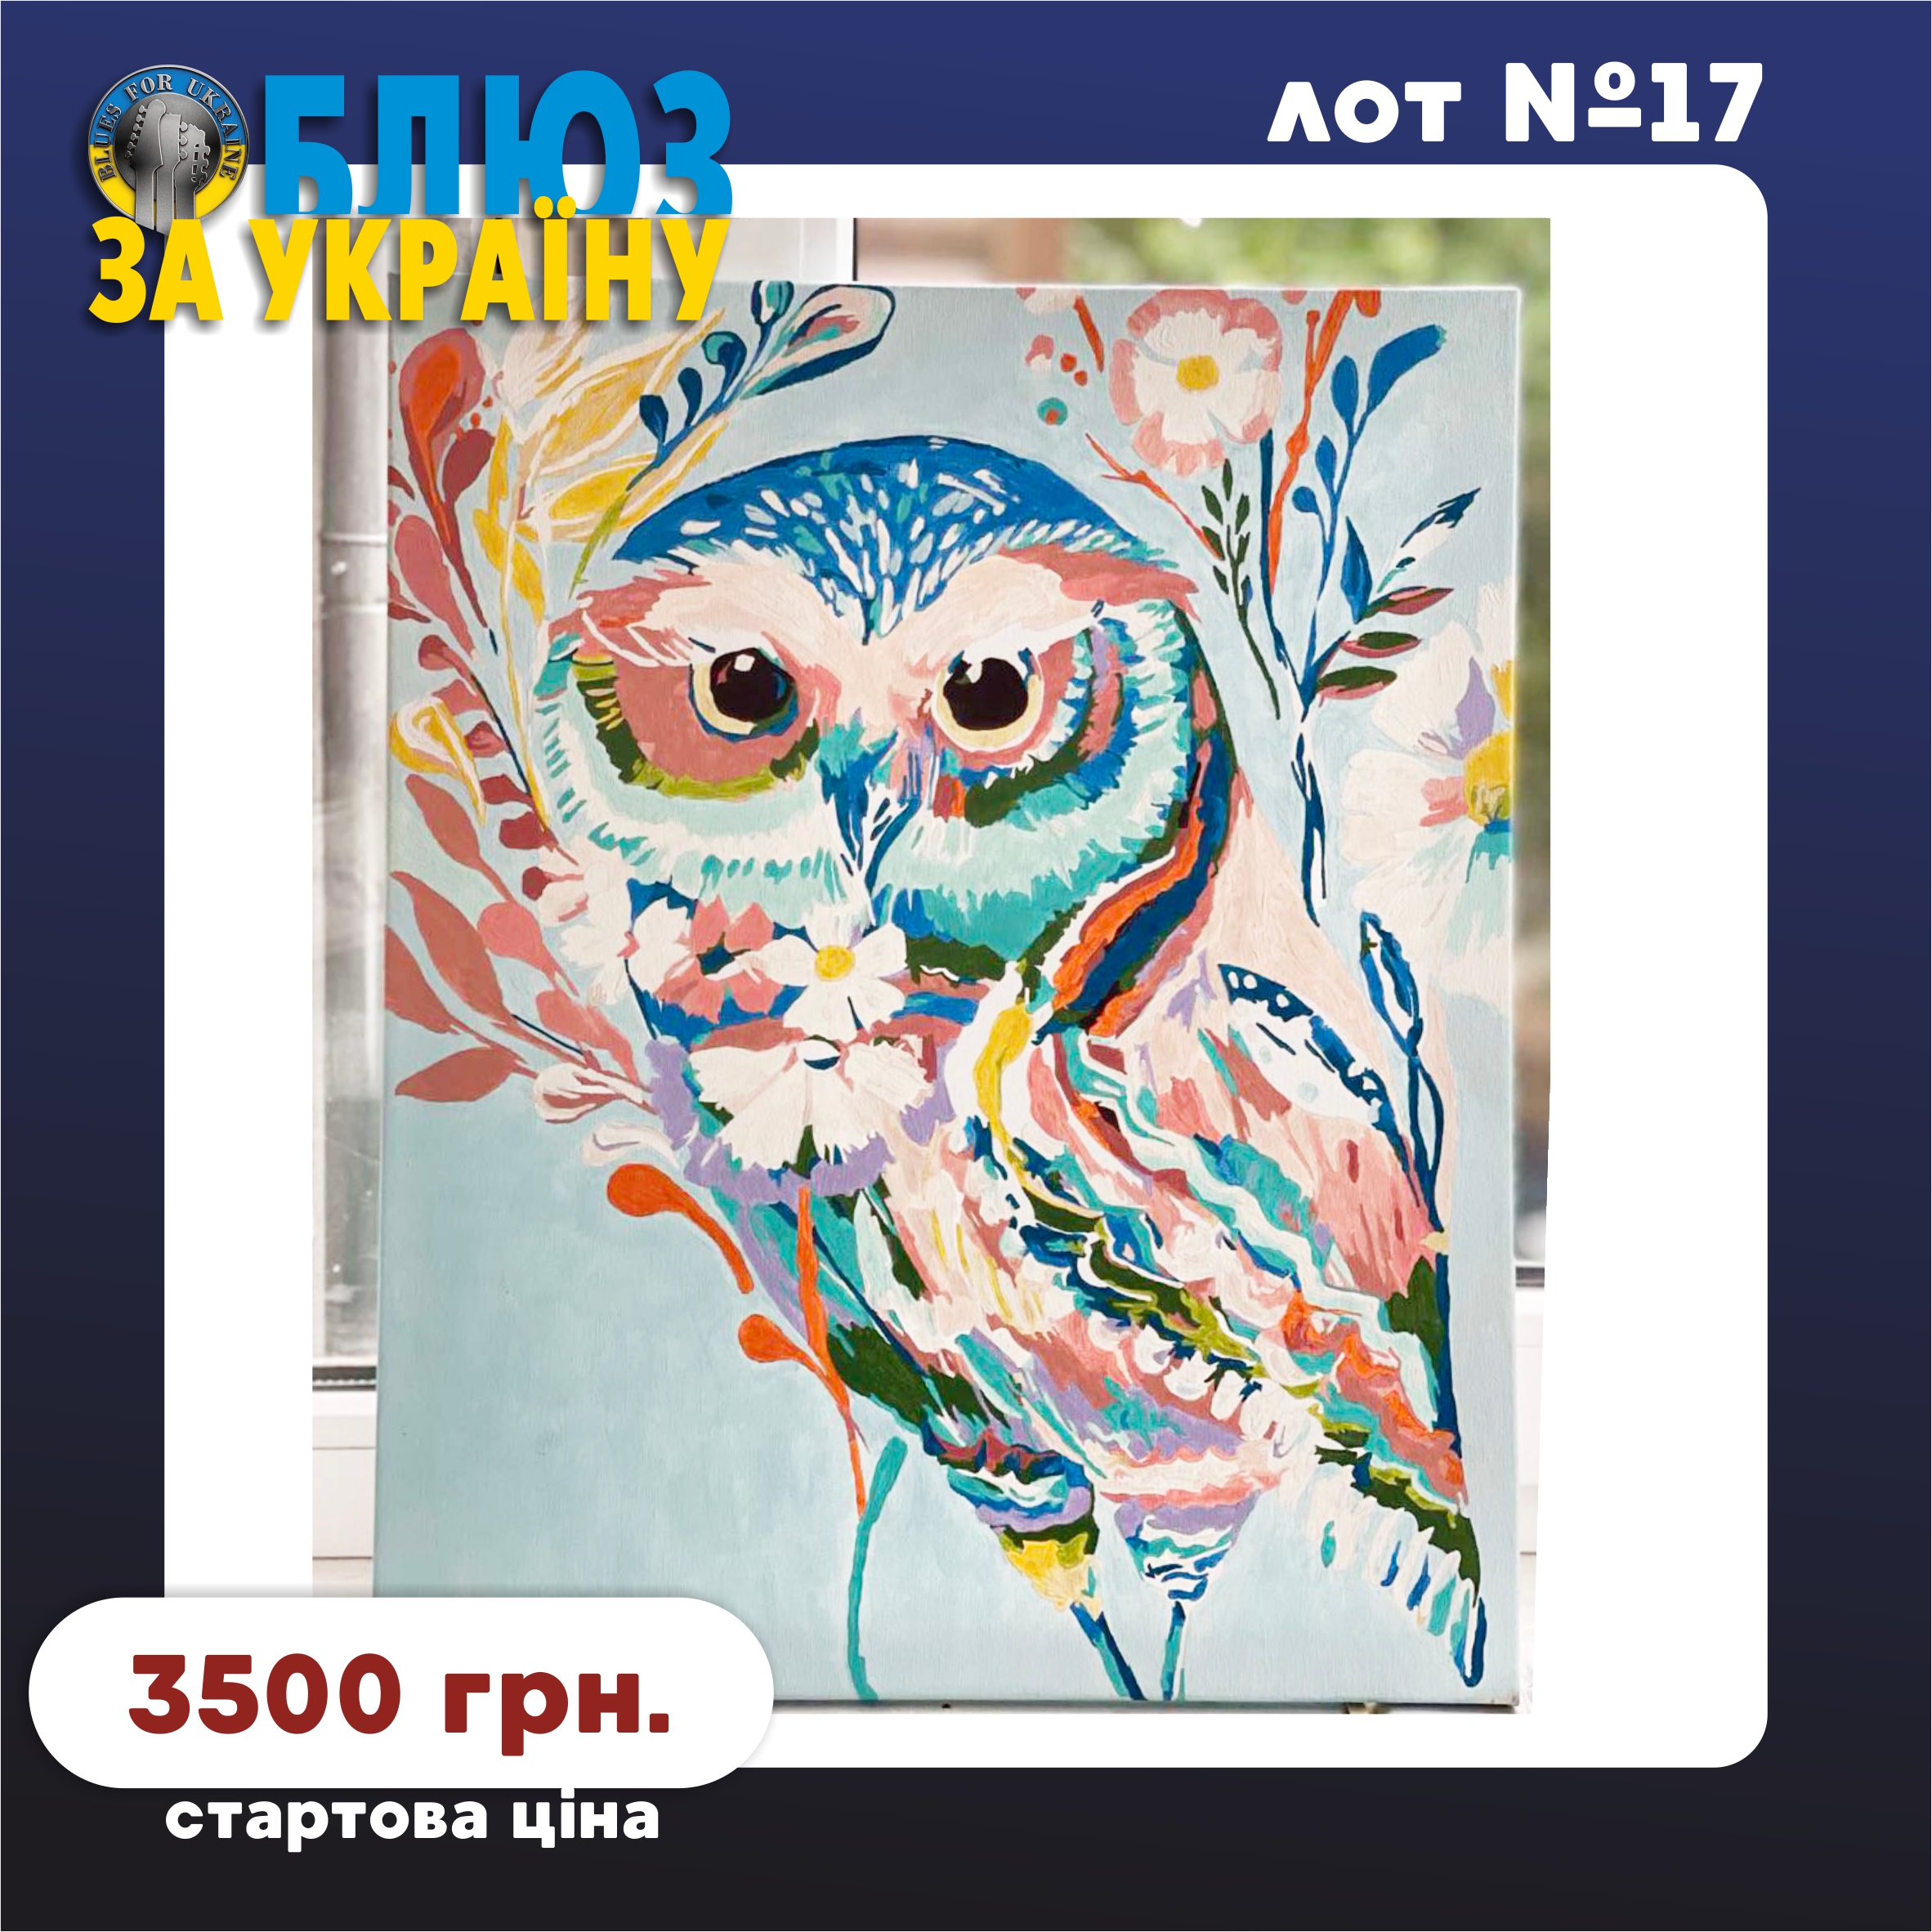 Lot №17. Картина з Херсону "Сова" (Painting from Kherson "Owl")